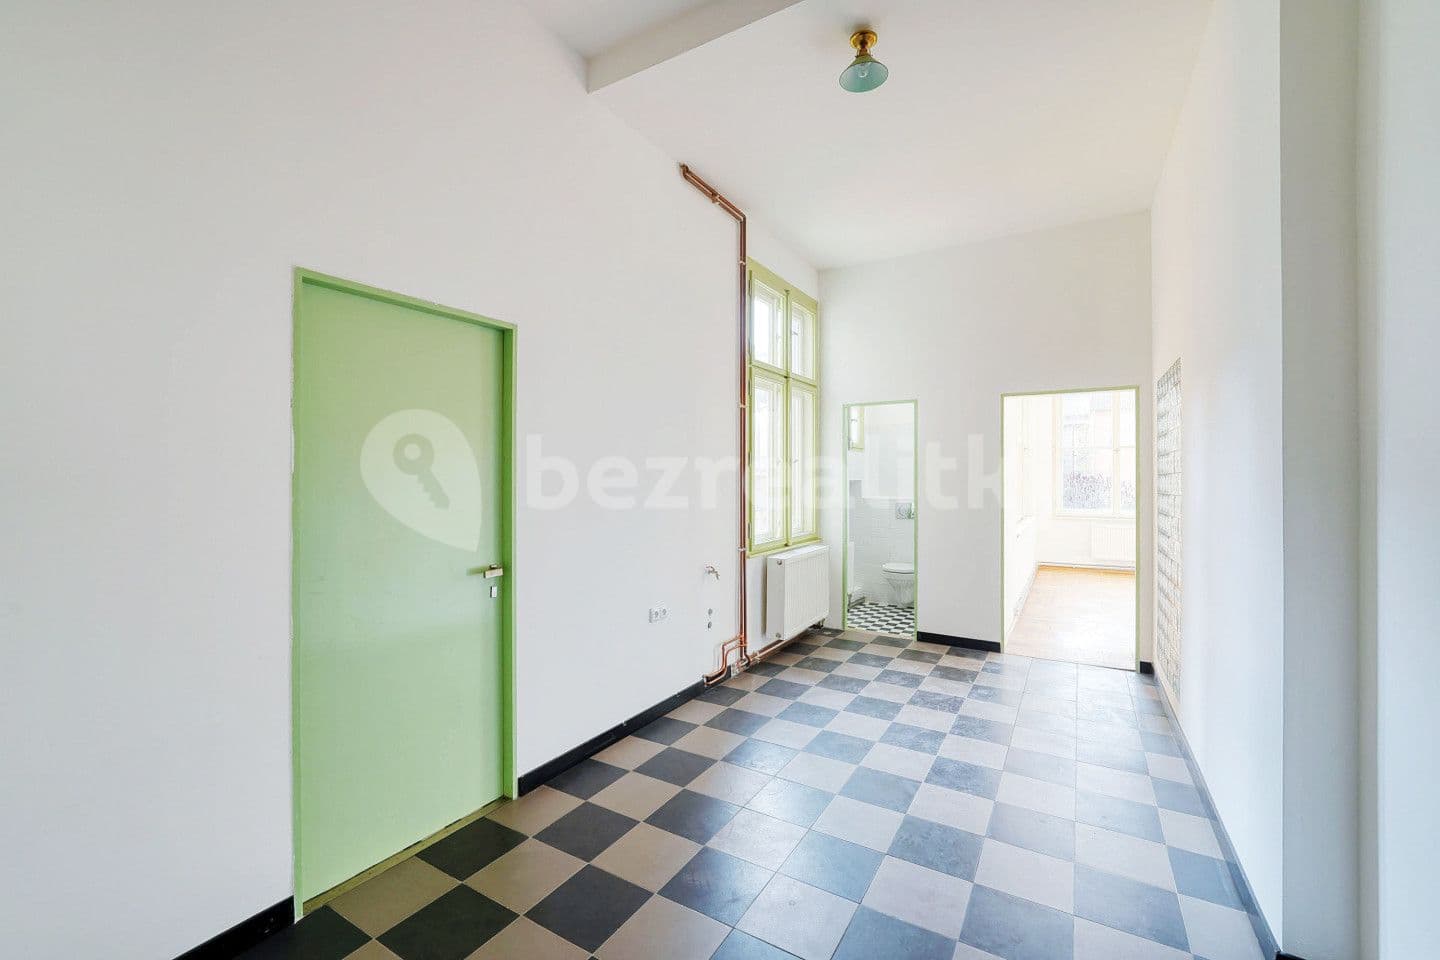 3 bedroom flat for sale, 179 m², Skrétova, Plzeň, Plzeňský Region